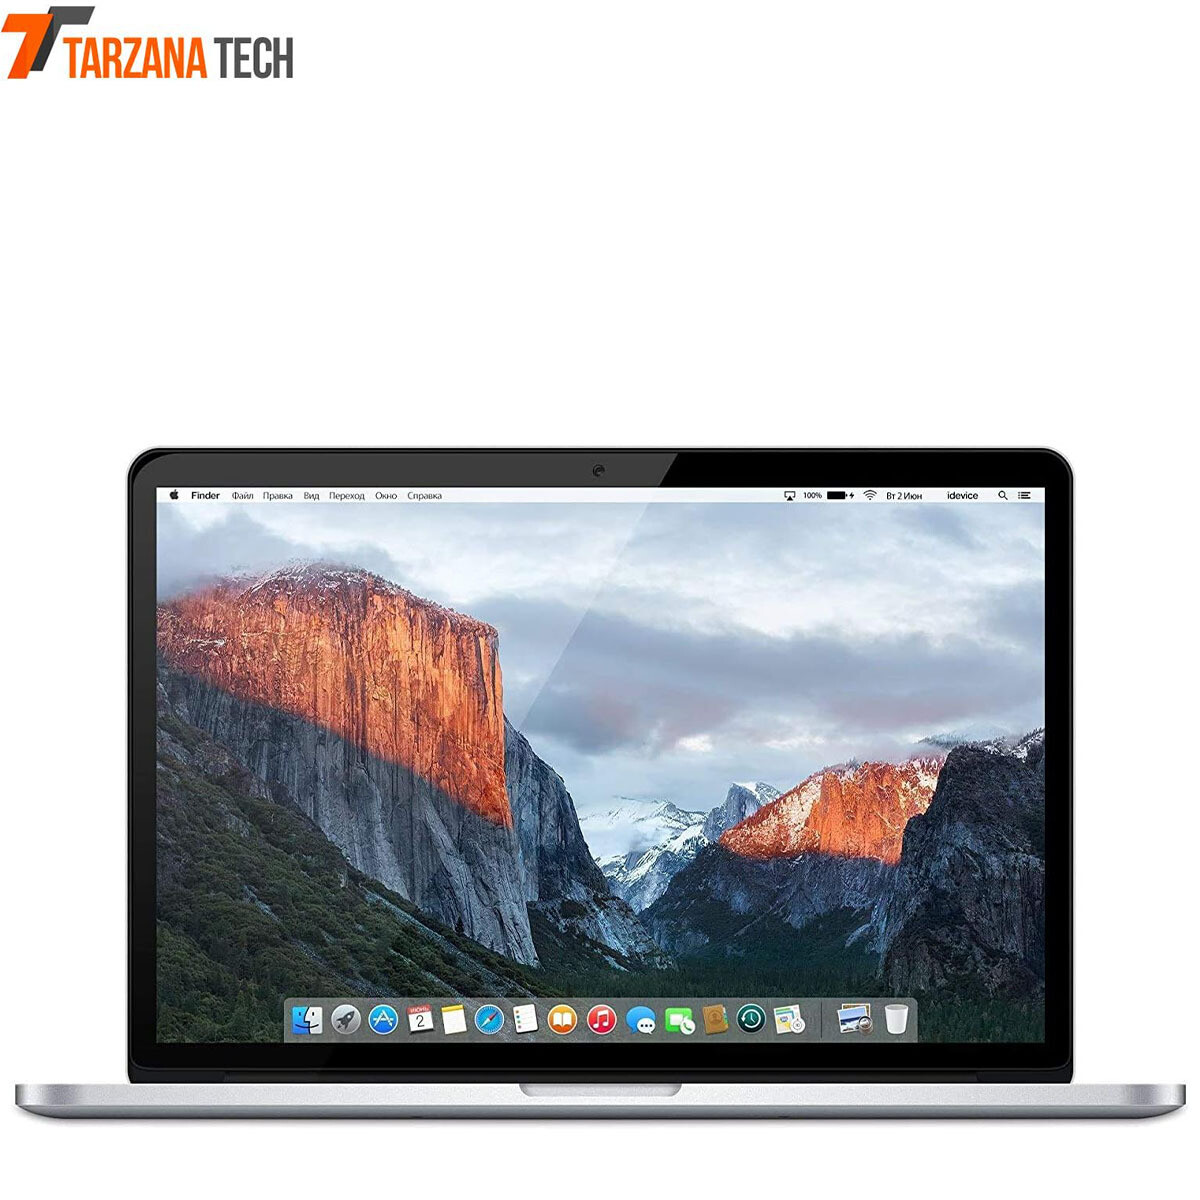 Apple MacBook Pro Retina 15-inch Intel Core i7 2.7Ghz